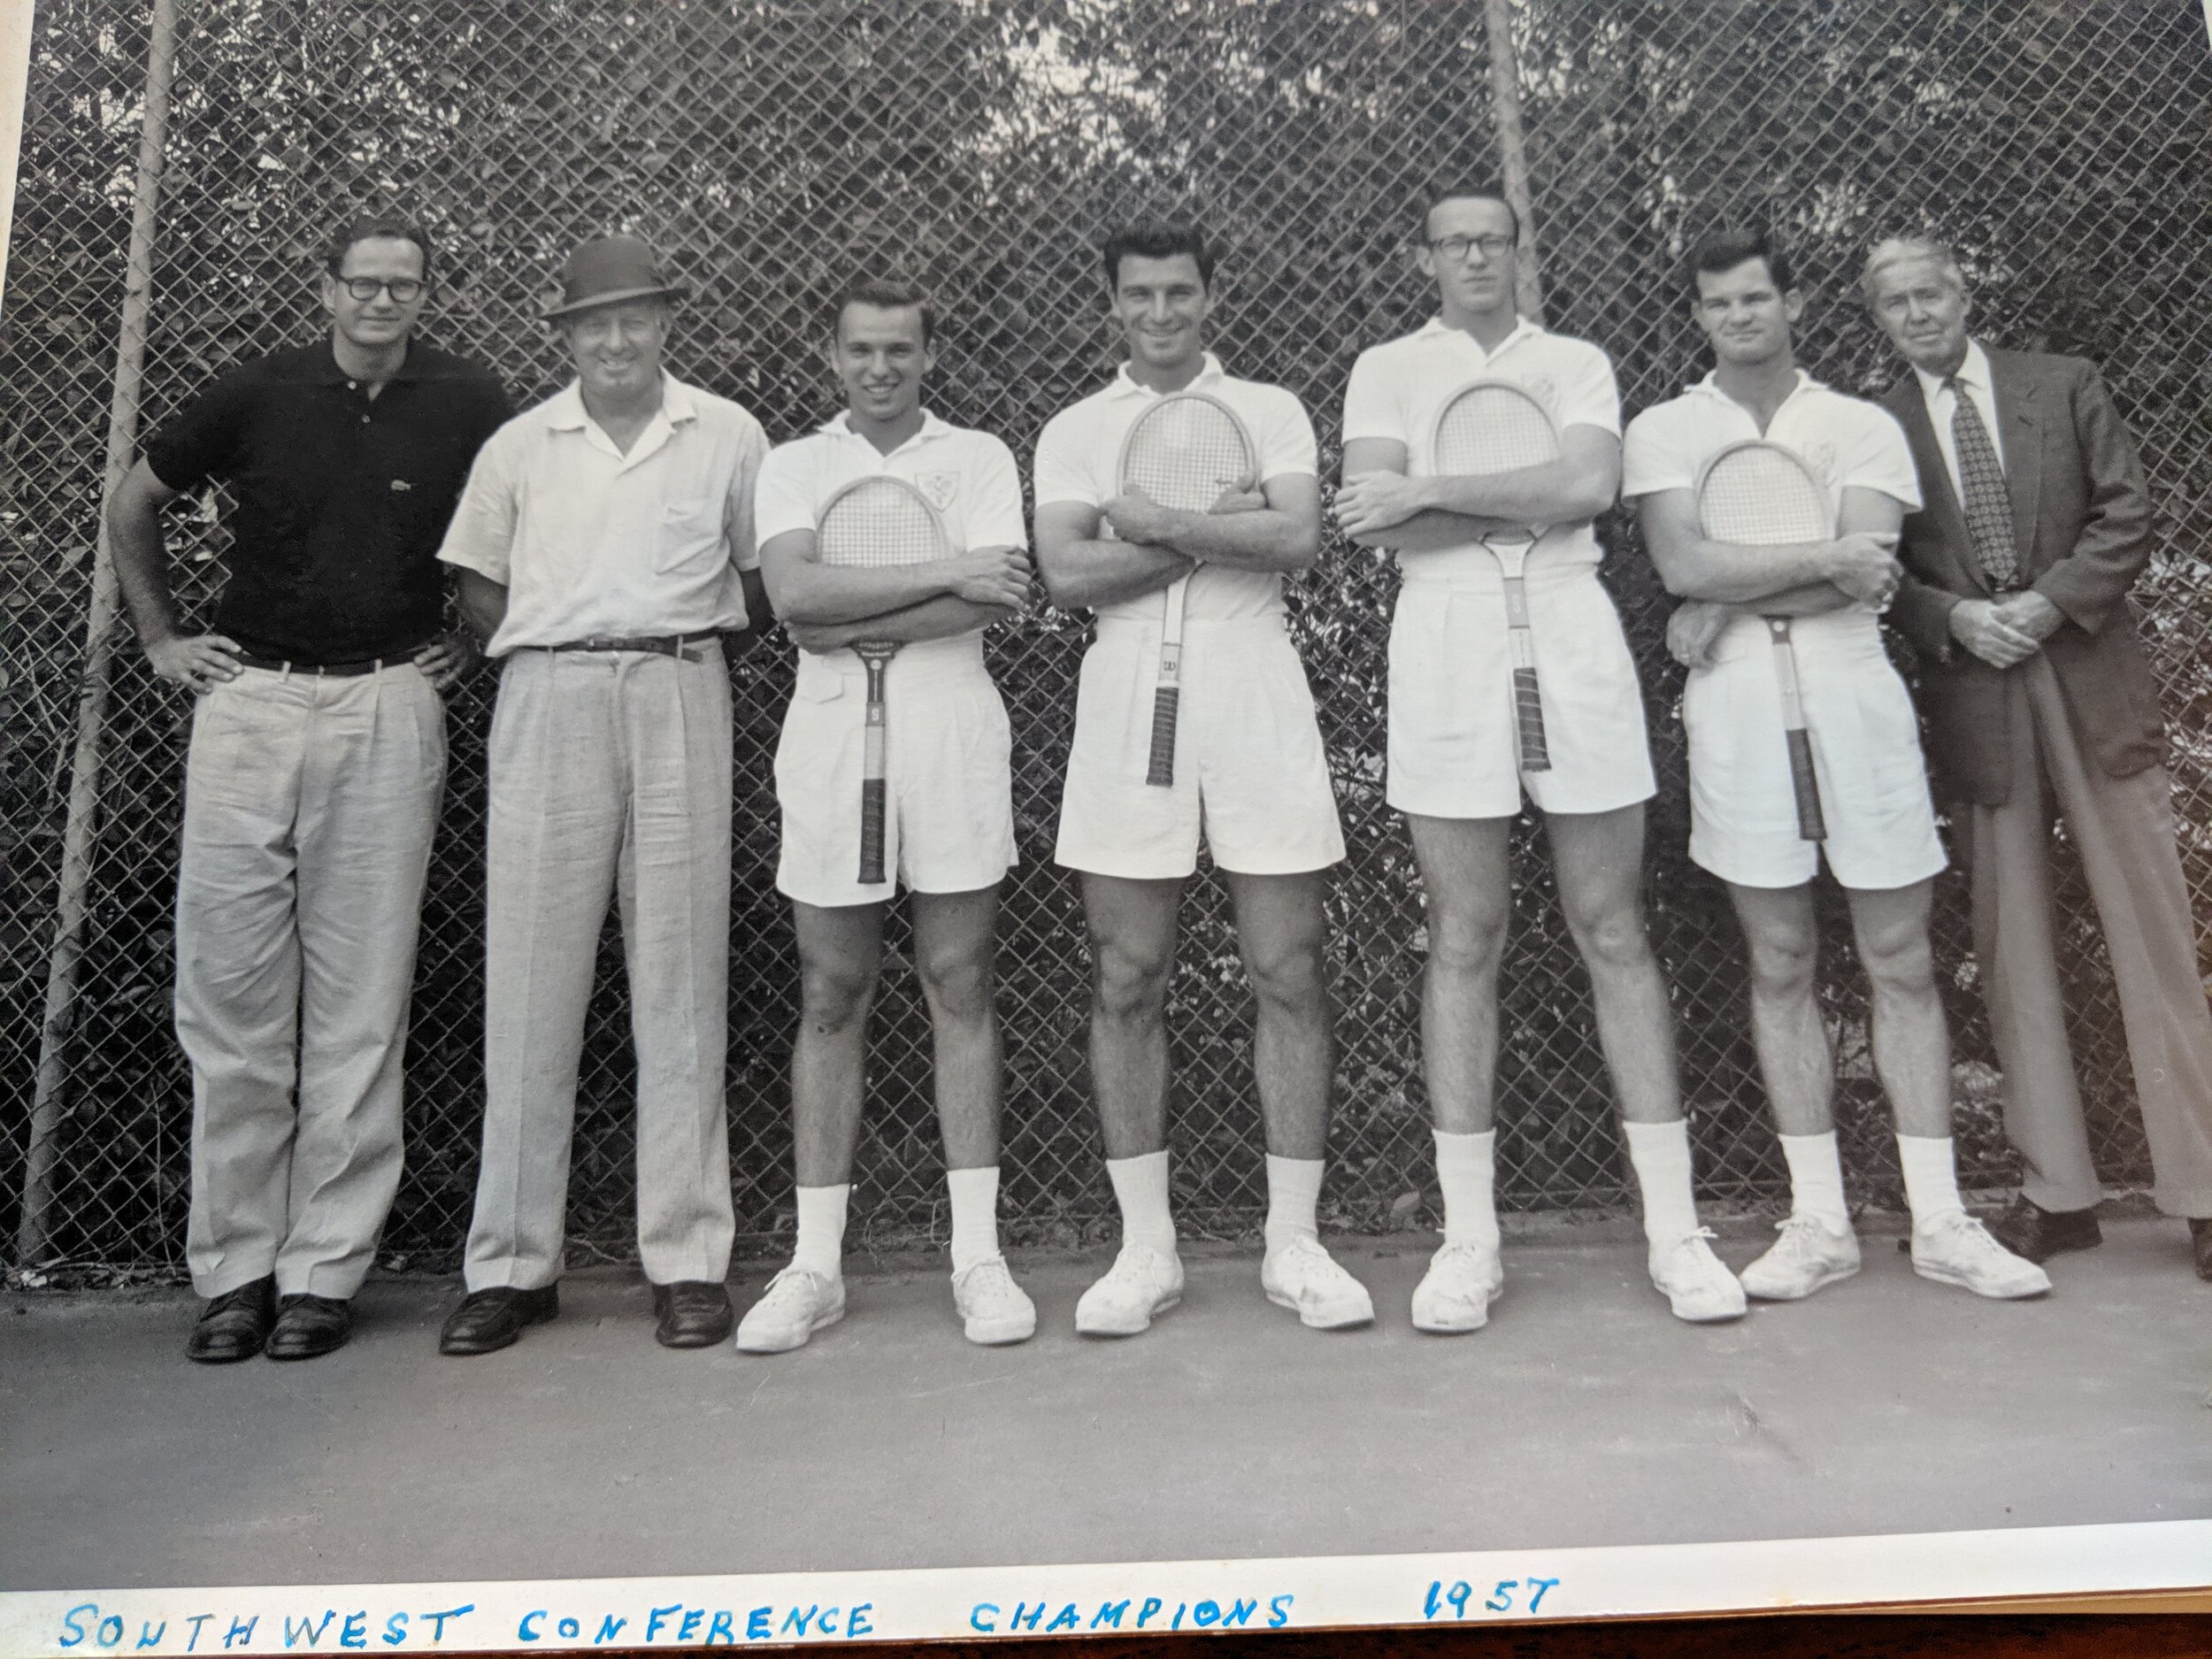 1957 tennis team.jpg